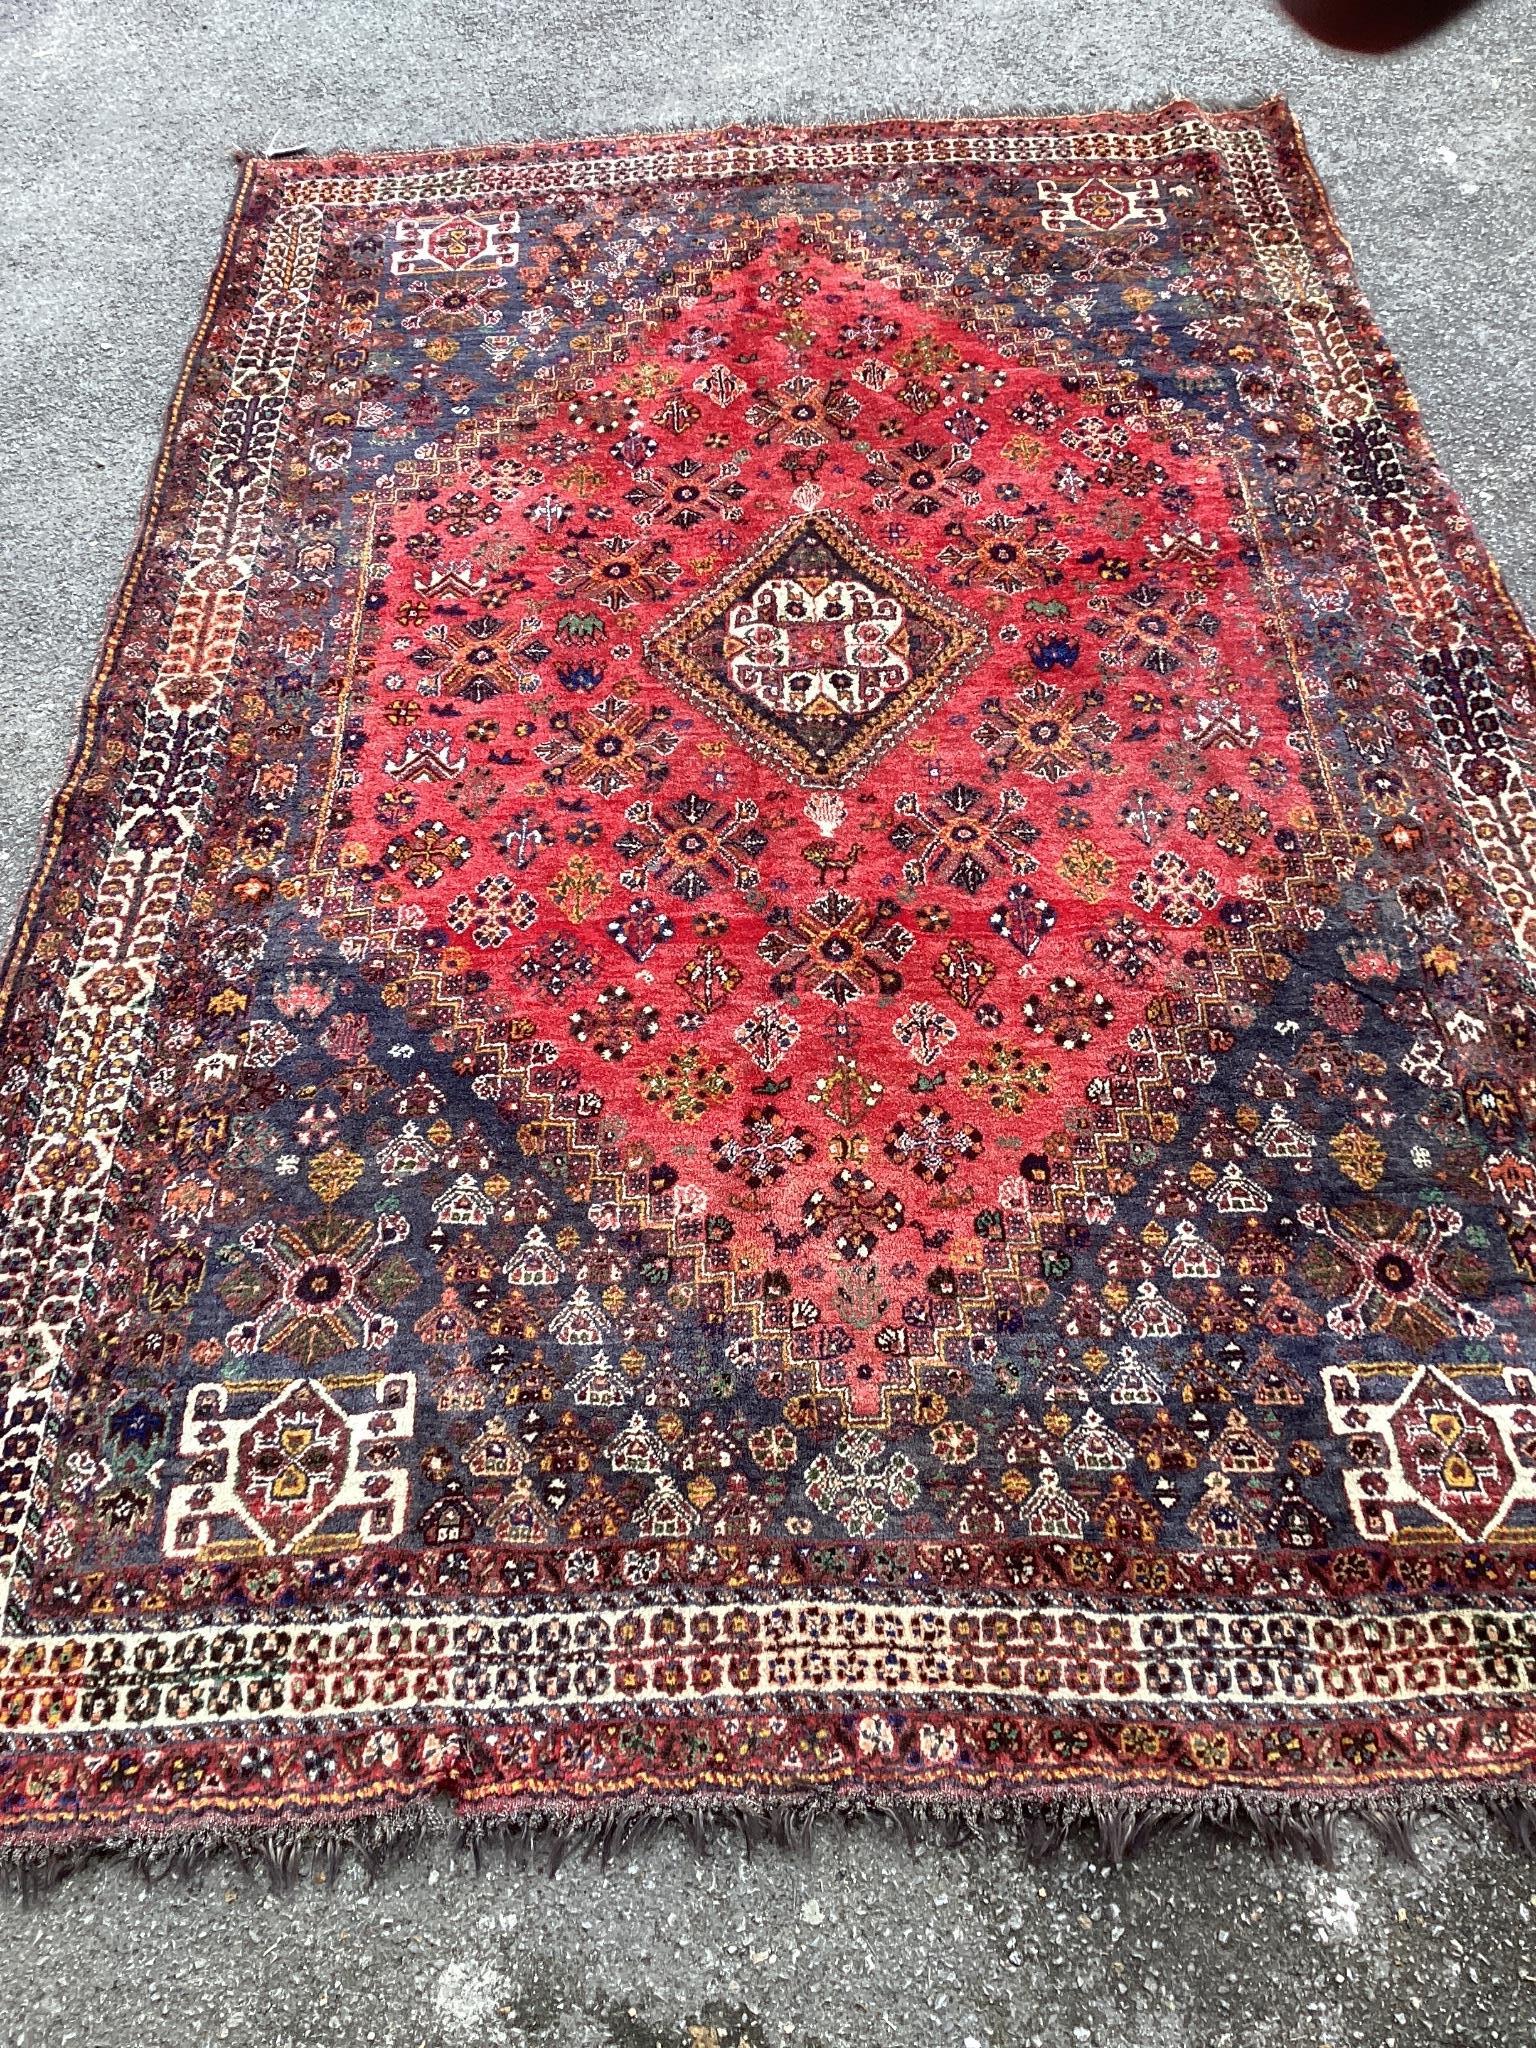 A Hamadan red ground carpet, 290 x 182cm